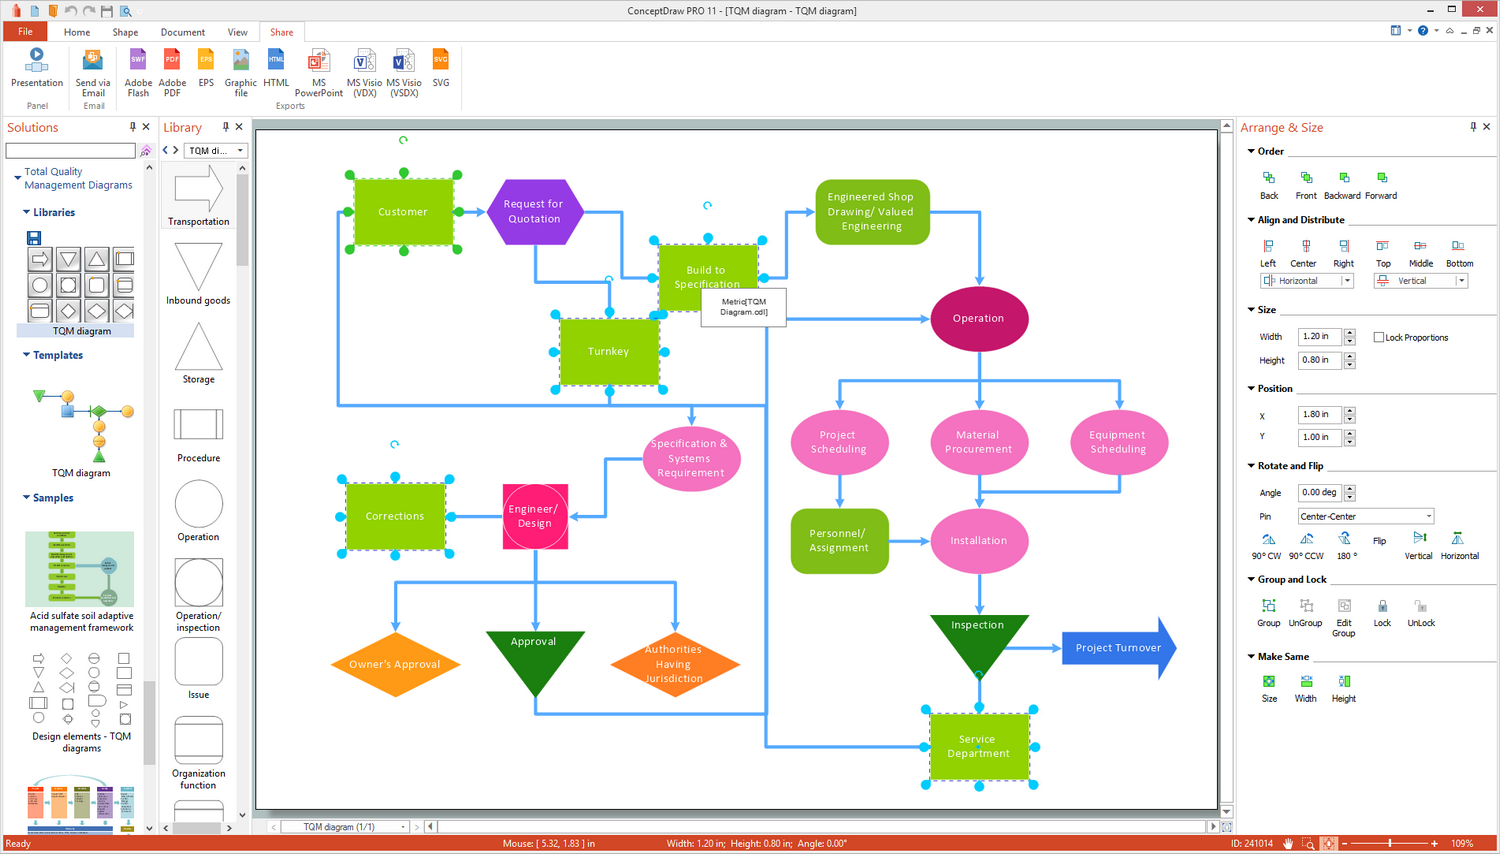 Total Quality Management Diagrams Solution | ConceptDraw.com process flow diagram visio 